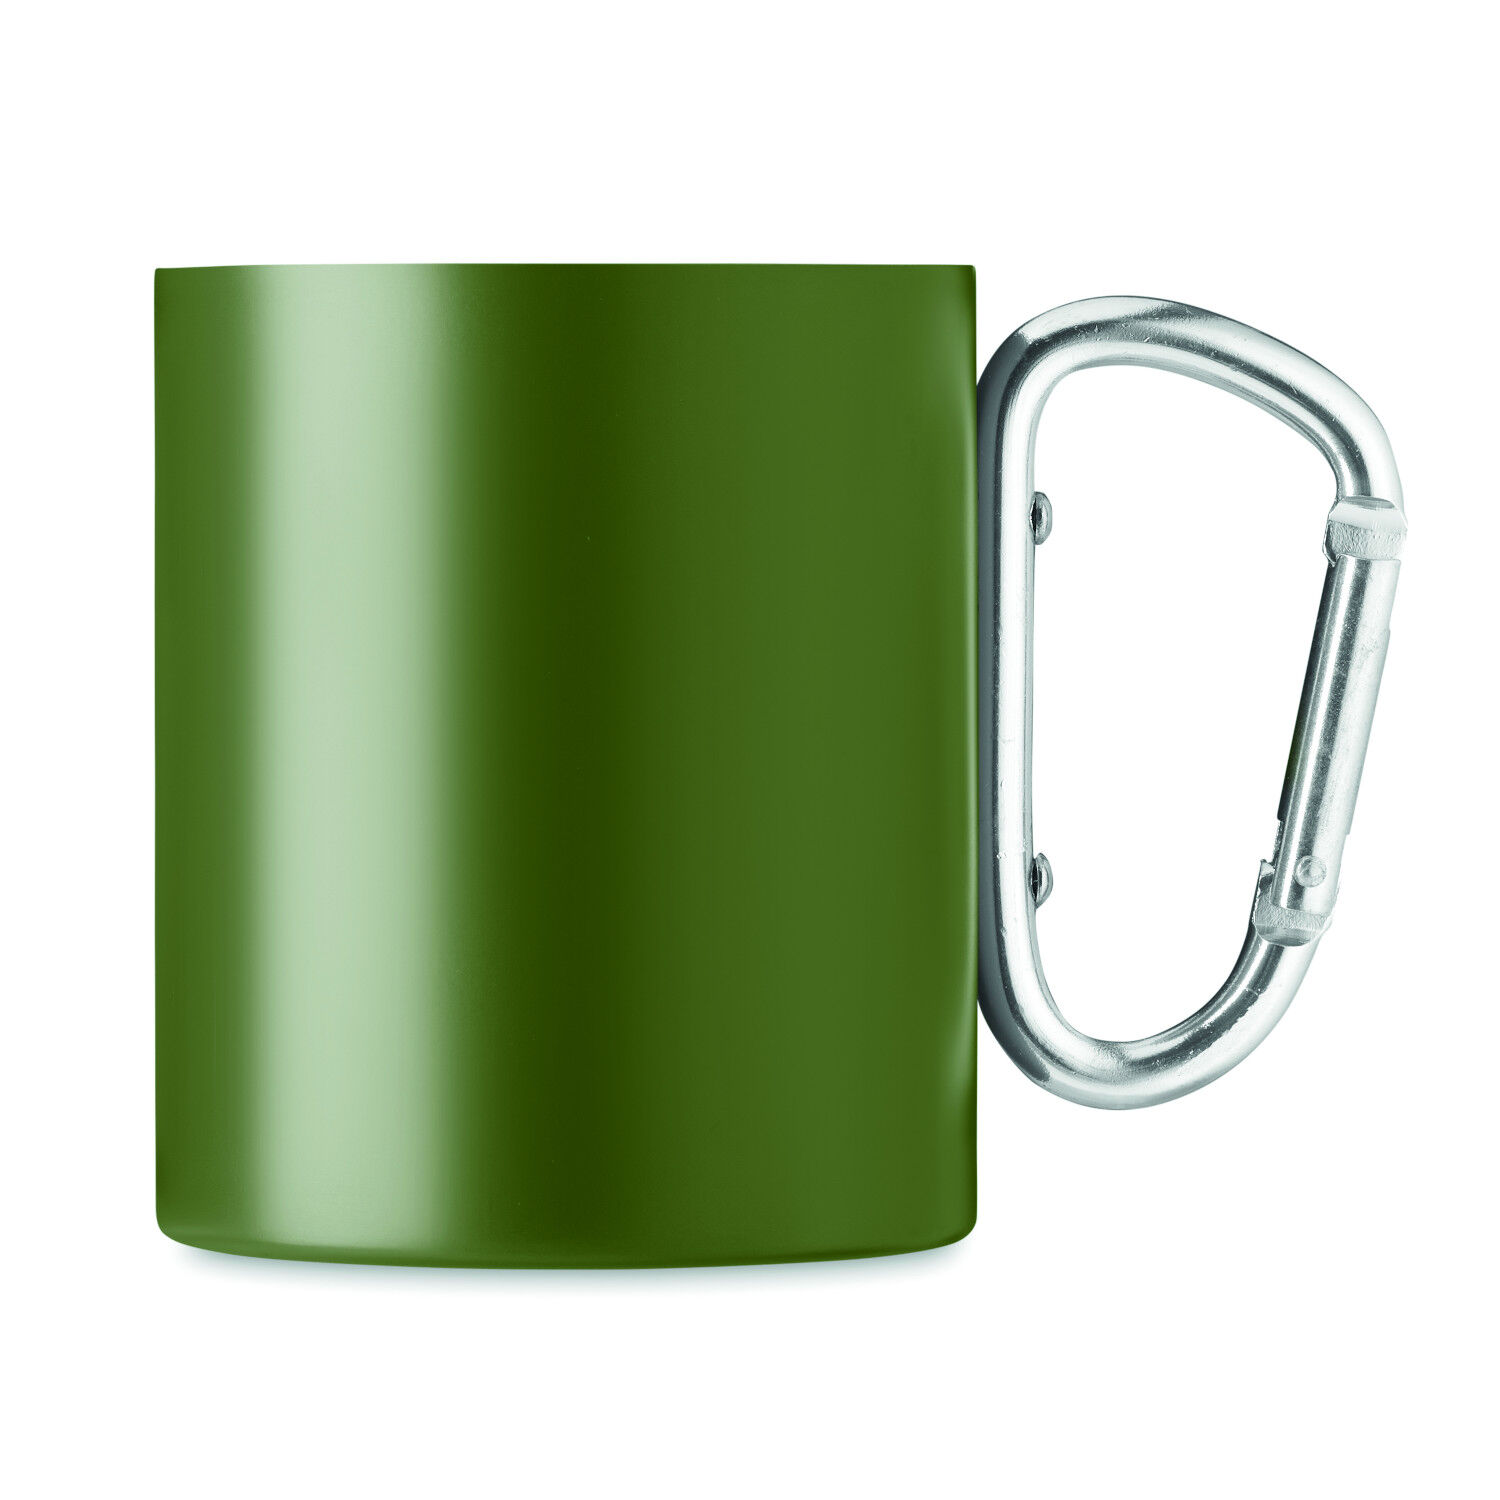   Steel Insulated Mug with Carabiner Handle (green)